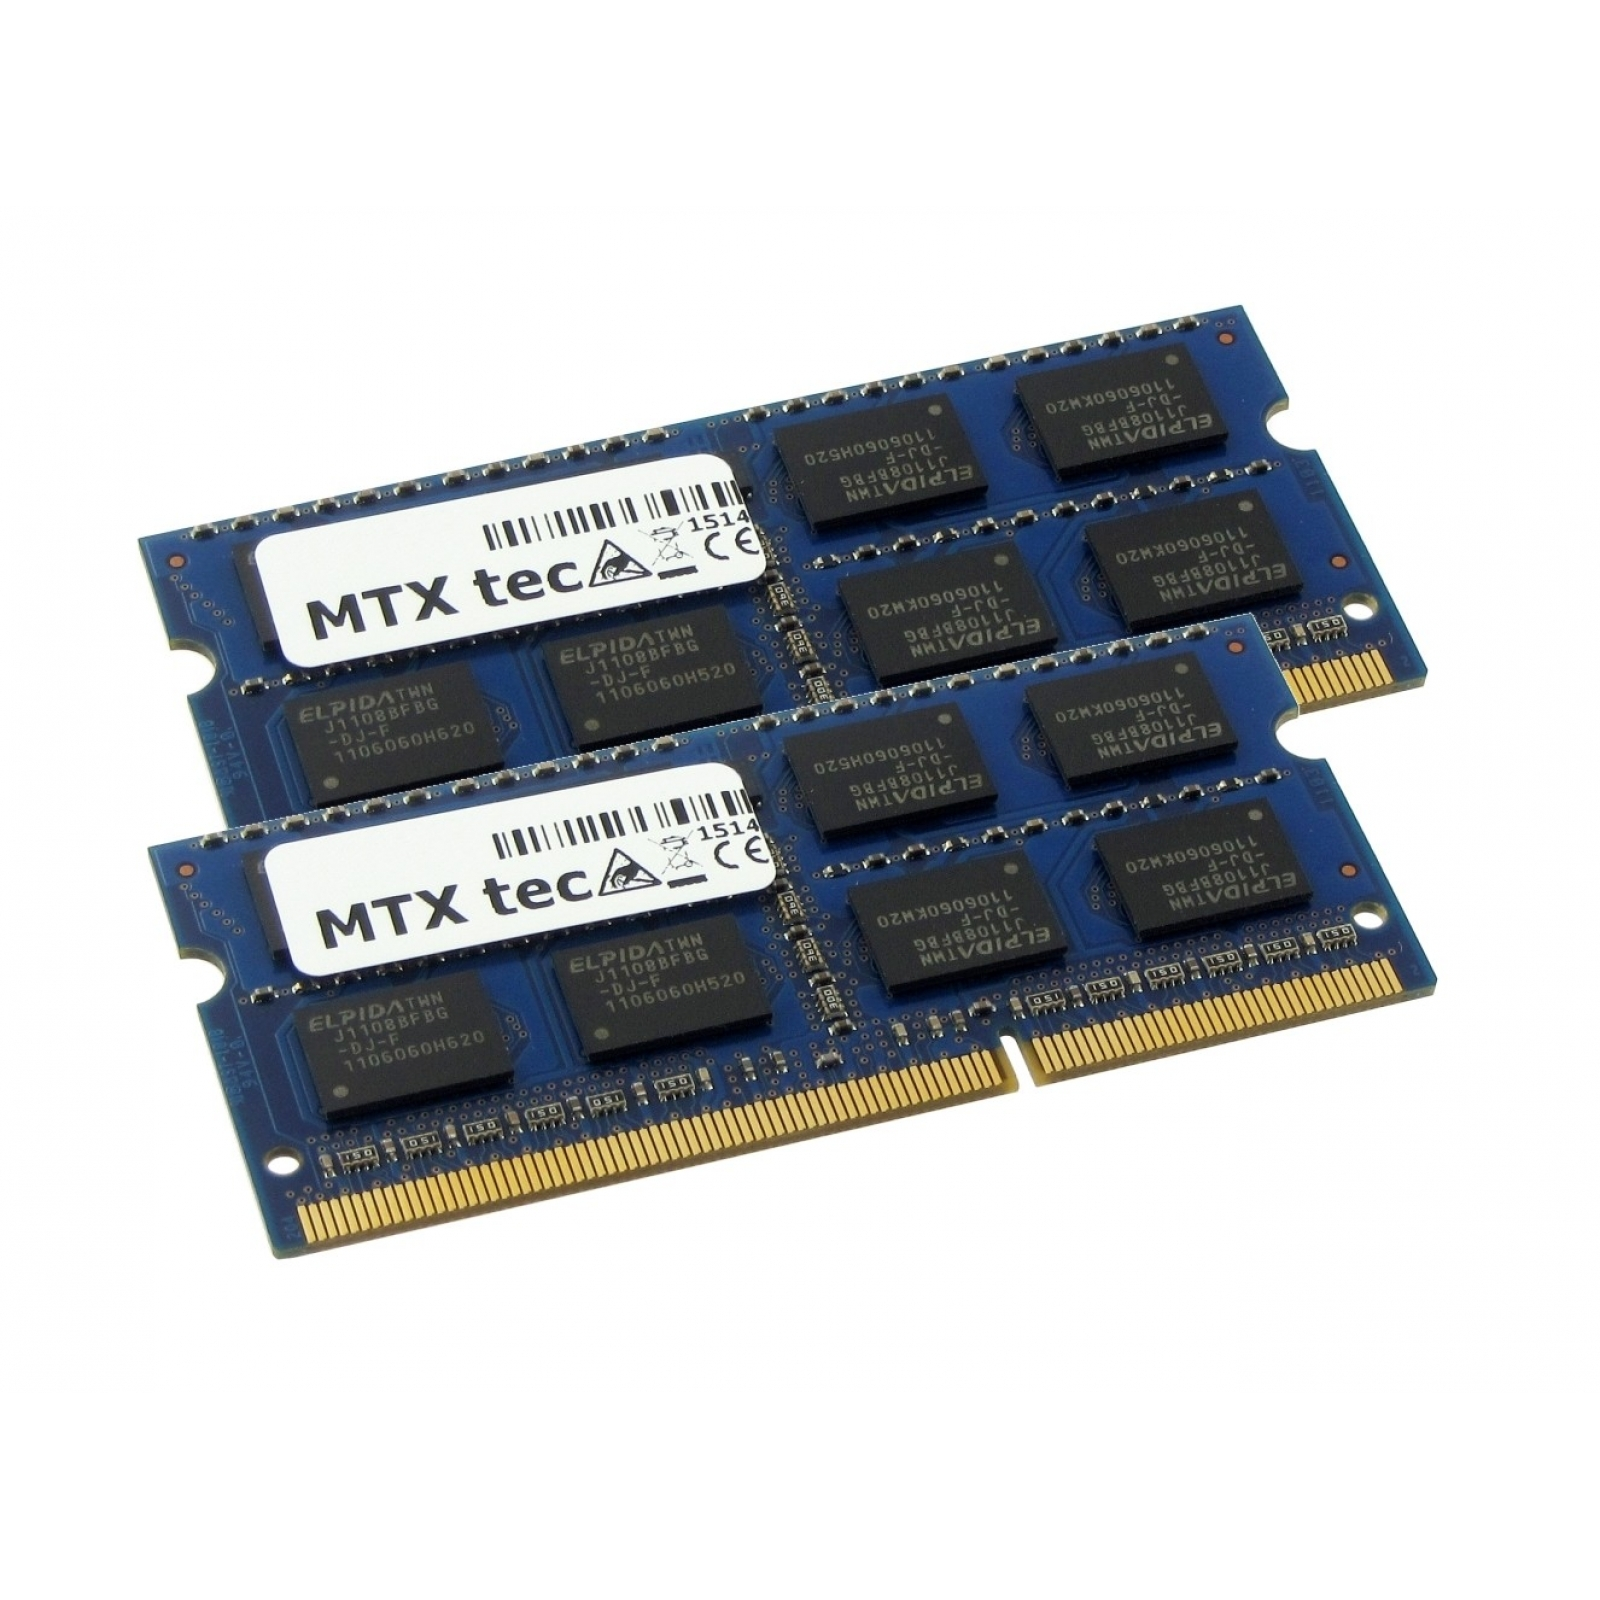 MTXTEC 8GB Kit Laptop-Speicher 2x DDR3 1066MHz RAM 4 204 SODIMM DDR3 Notebook-Speicher DDR3 GB Pin 4GB PC3-8500